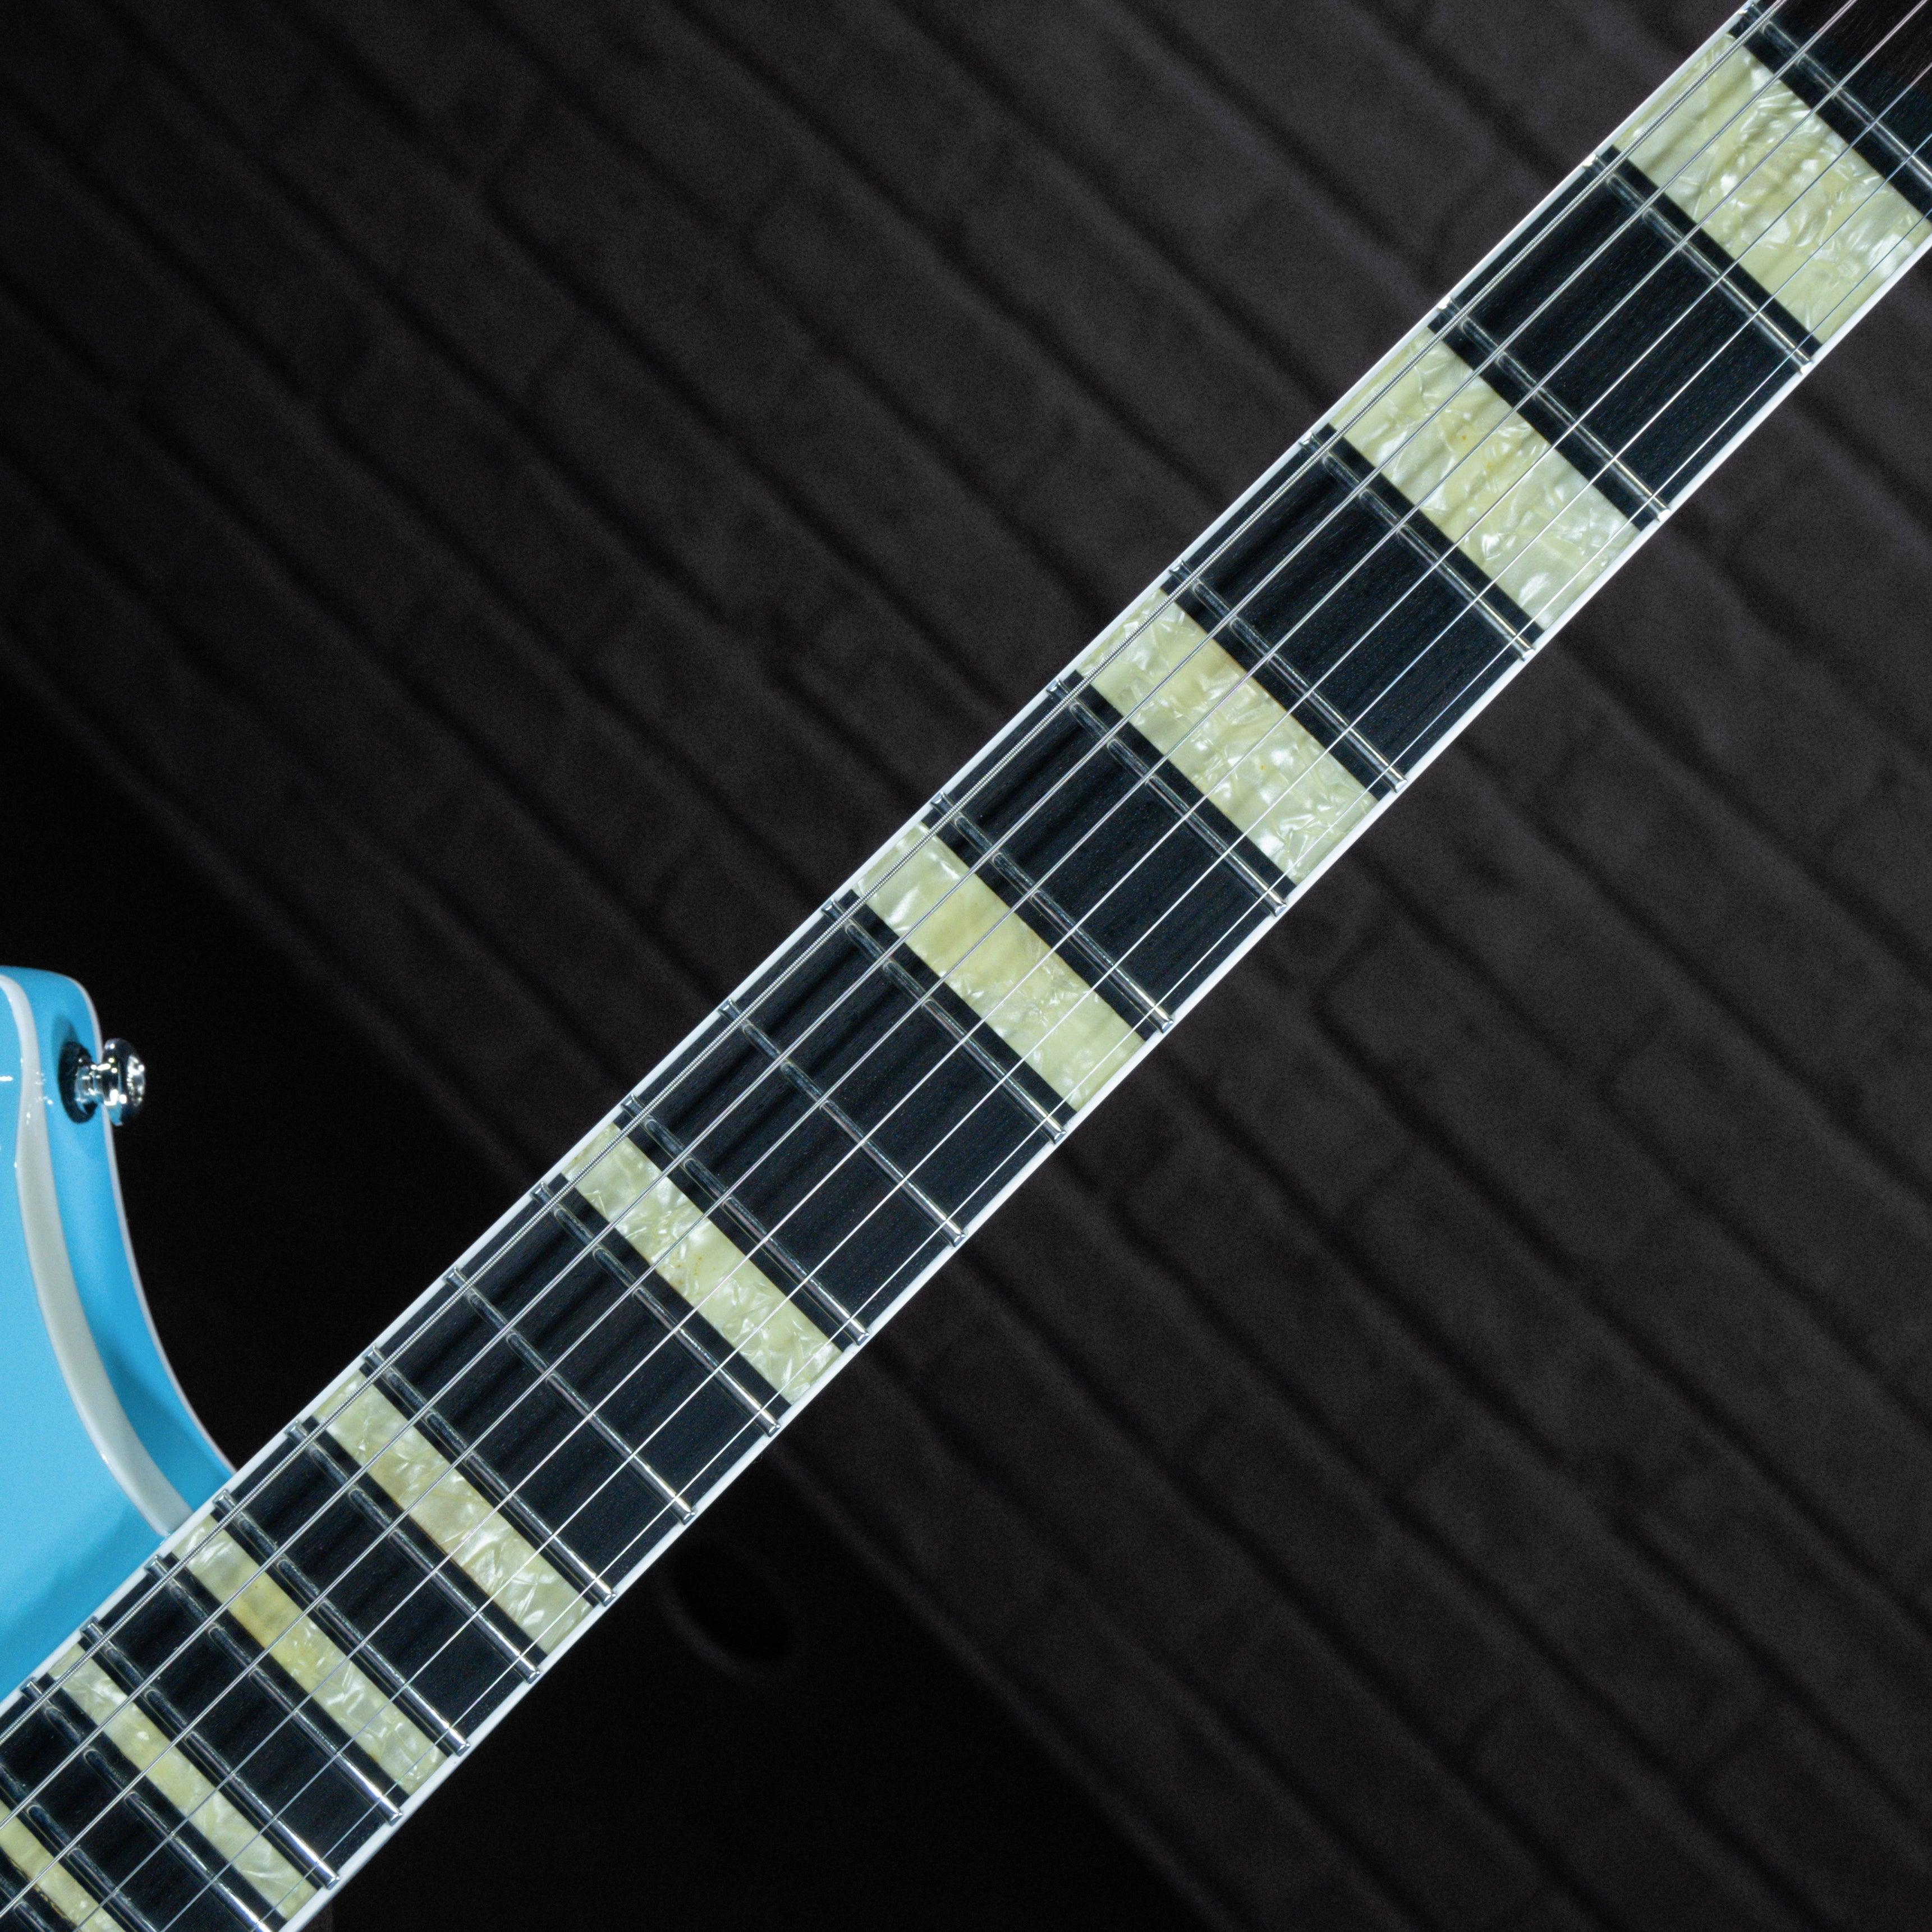 Rivolta Combinata XVII HSS "Califia Blue" (Impulse Music Co. Exclusive) Electric Guitar - Impulse Music Co.